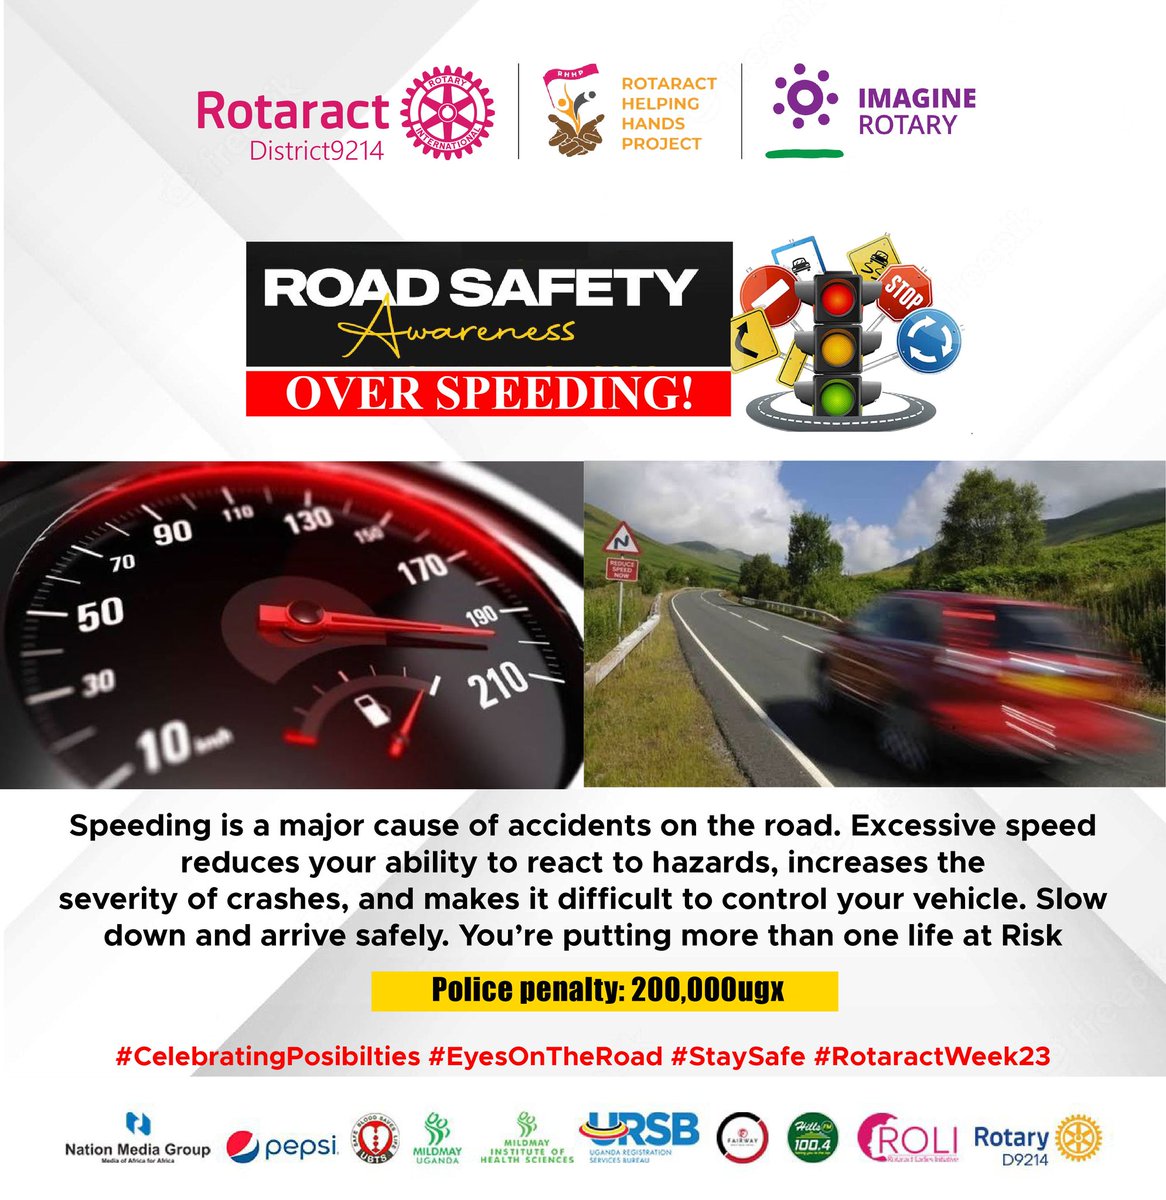 #CelebratingPosibilities
#EyesOnTheRoad
#StaySafe 
#RotaractWeek23
#WorldRotaractWeek